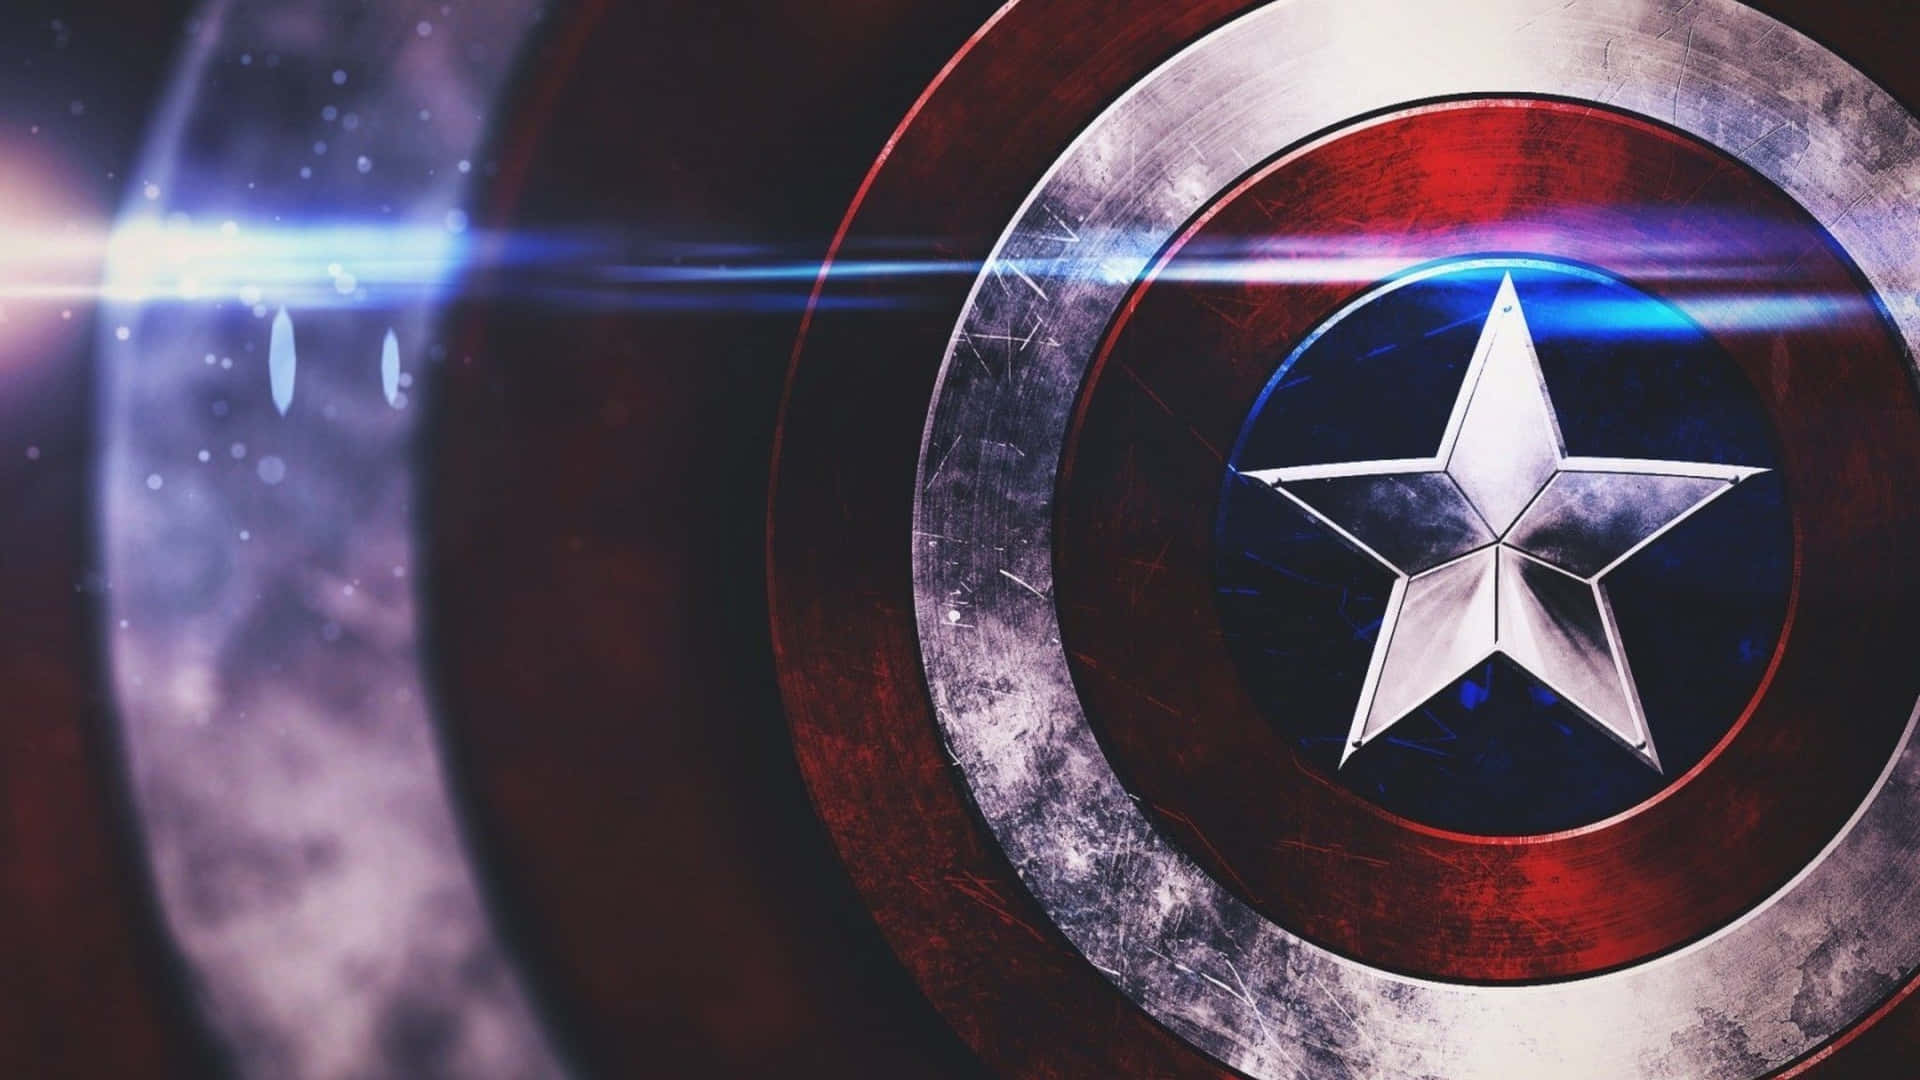 captain america shield logo wallpaper